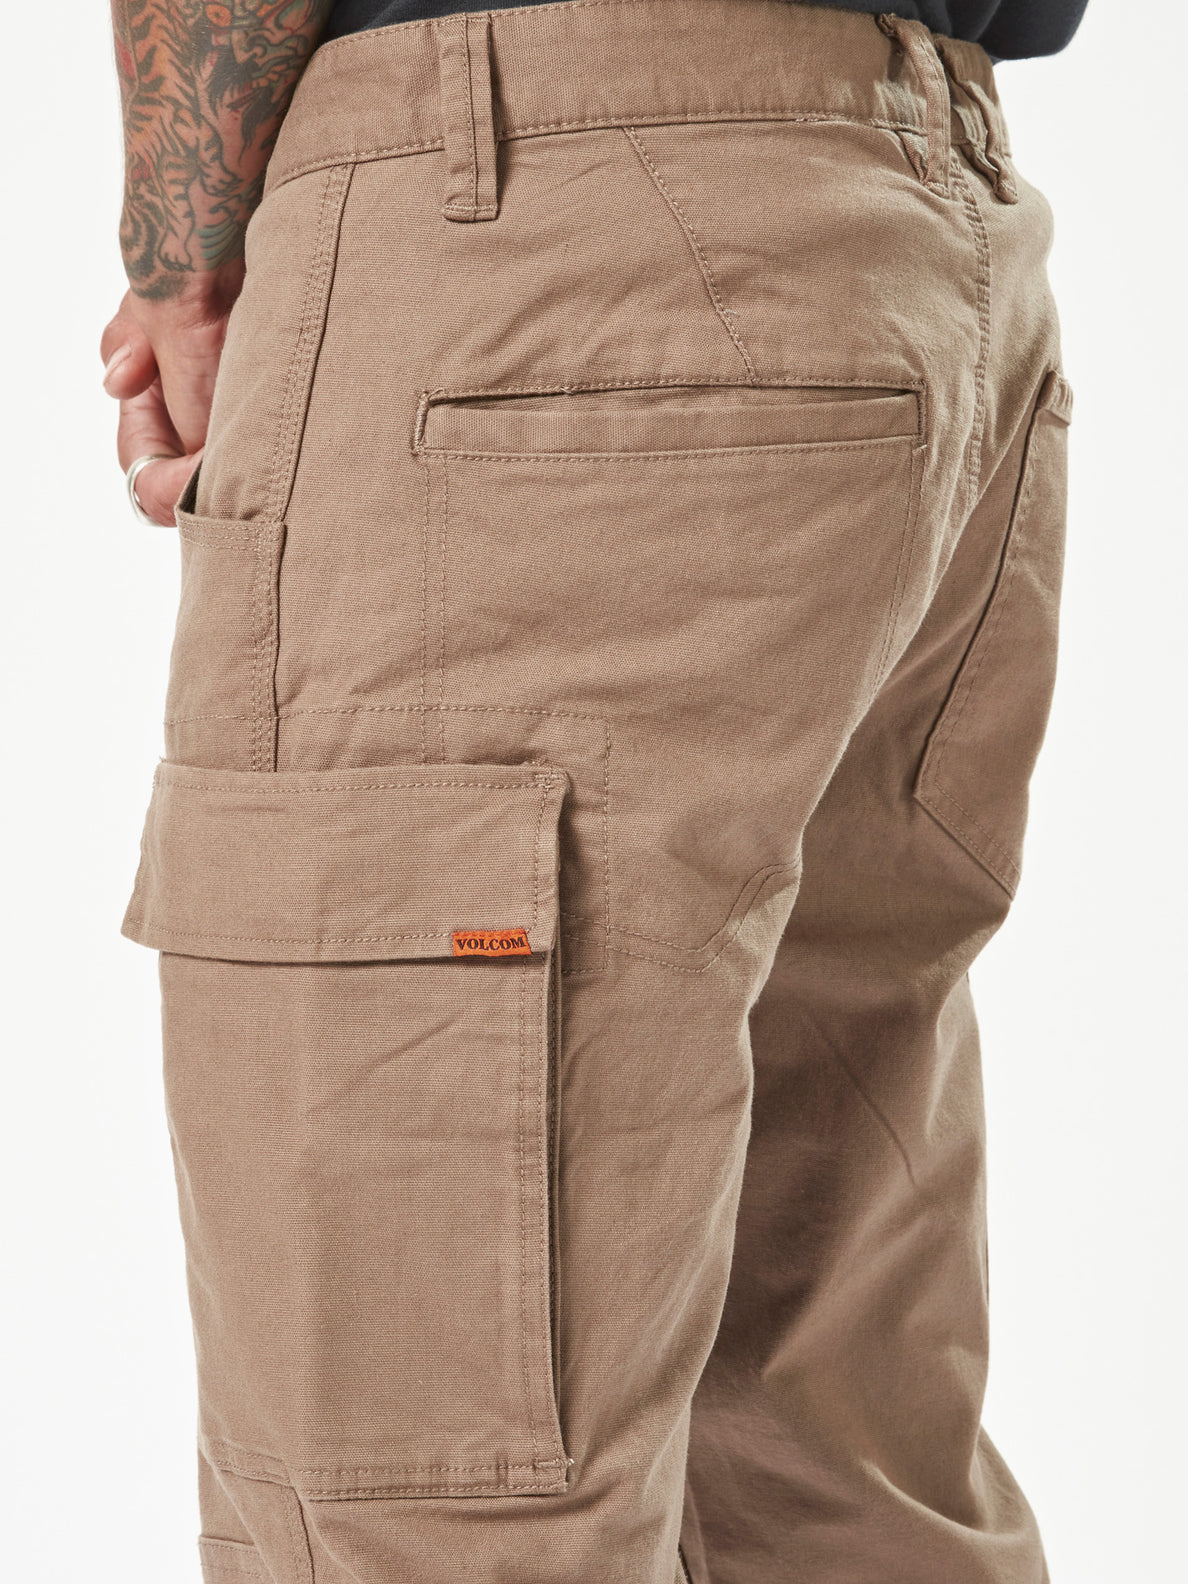 Volcom Workwear Caliper Work Pants - Brindle